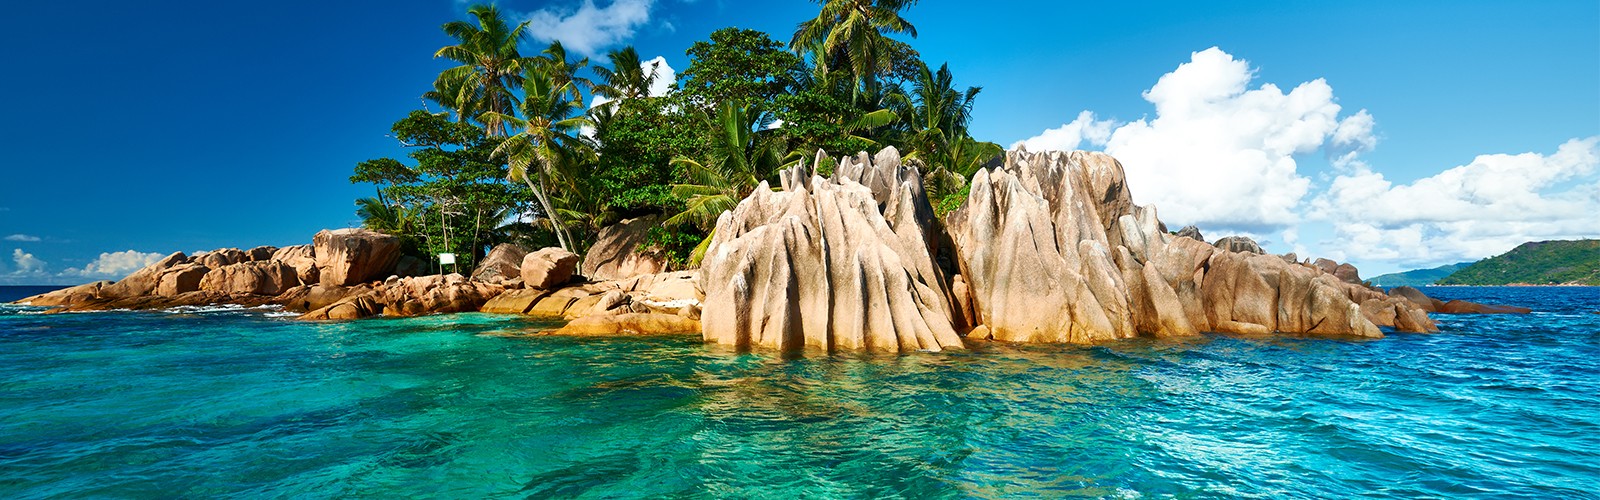 header - top island holiday destinations